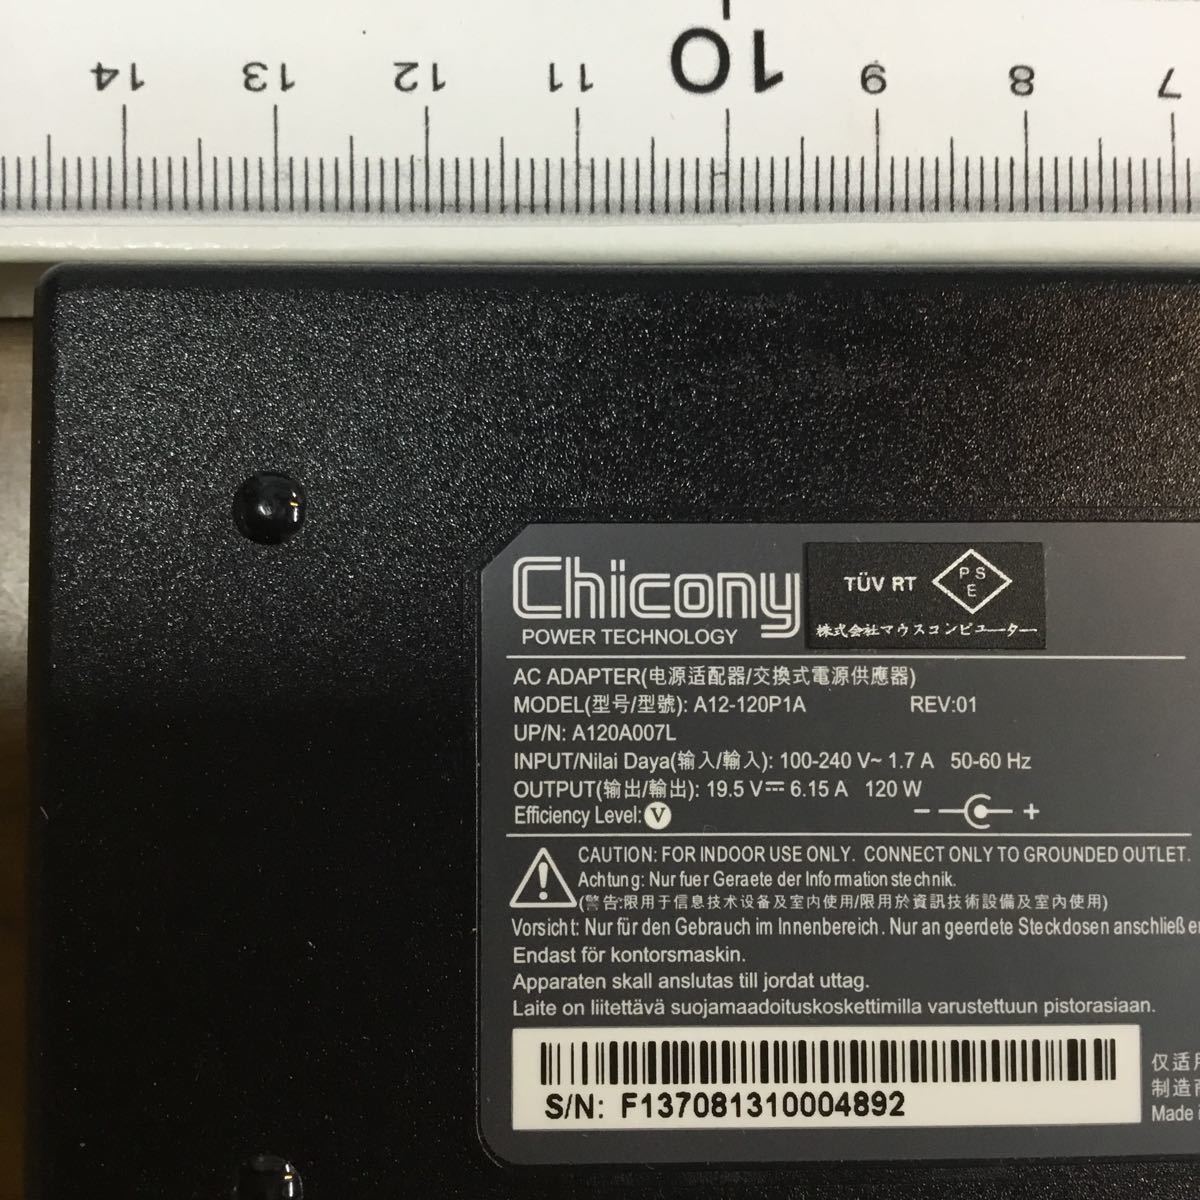 （1206OH11）送料無料/中古/Chicony チコニー/A12-120P1A/19.5V/6.15A/純正 ACアダプタ 2個セット_画像2